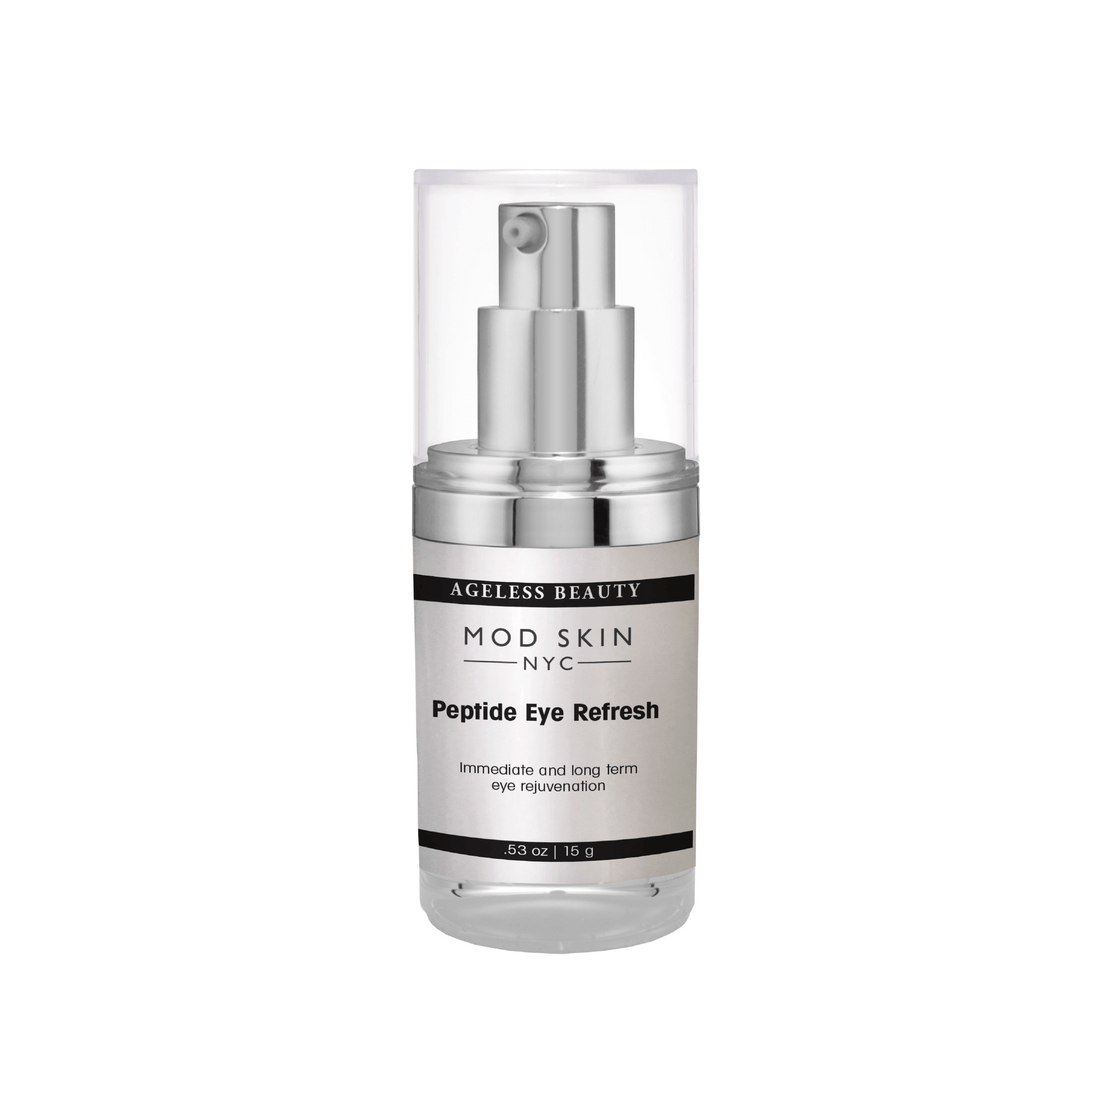 MOD SKIN NYC Peptide Eye Refresh (15 g / 0.53 oz) - The DLG Store